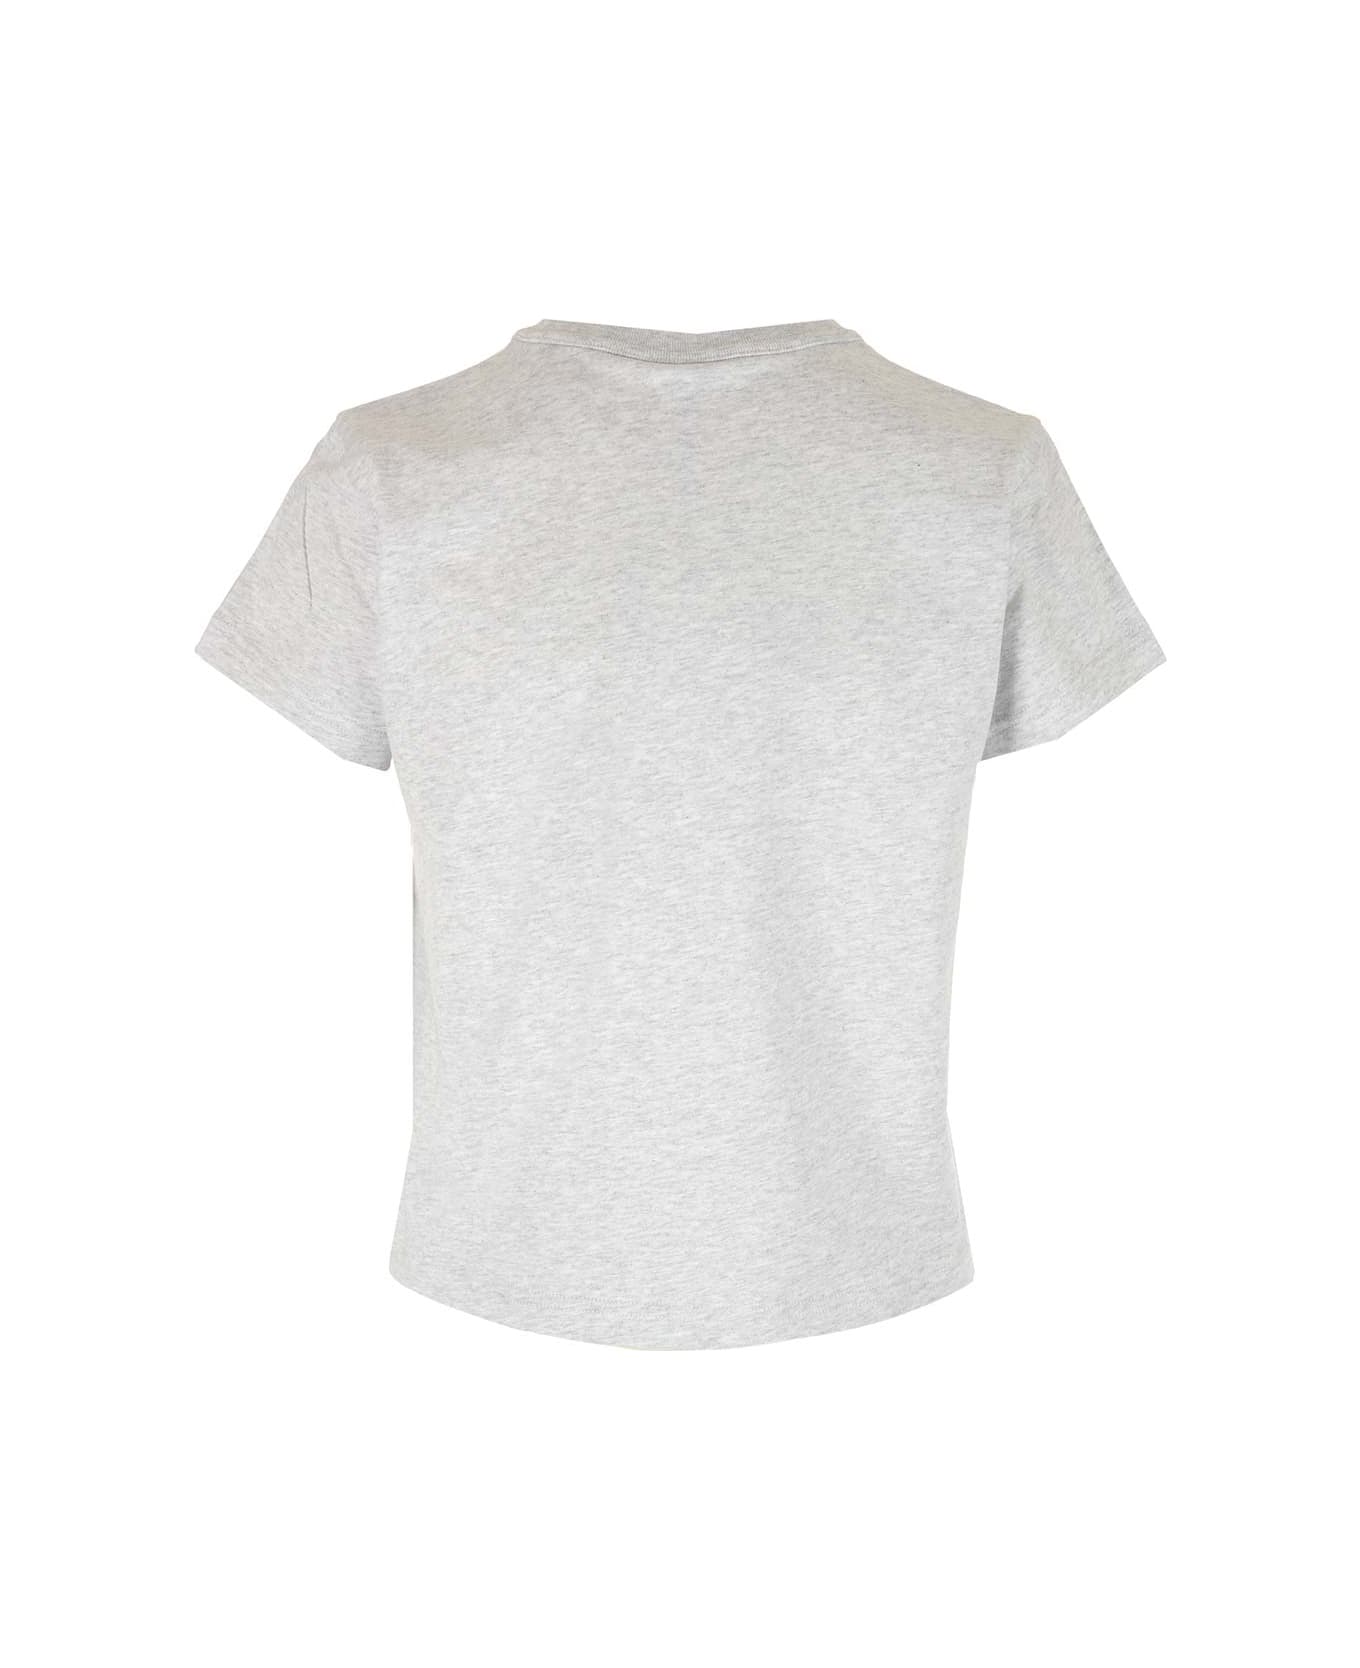 Alexander Wang 'essential' Grey T-shirt - Grigio